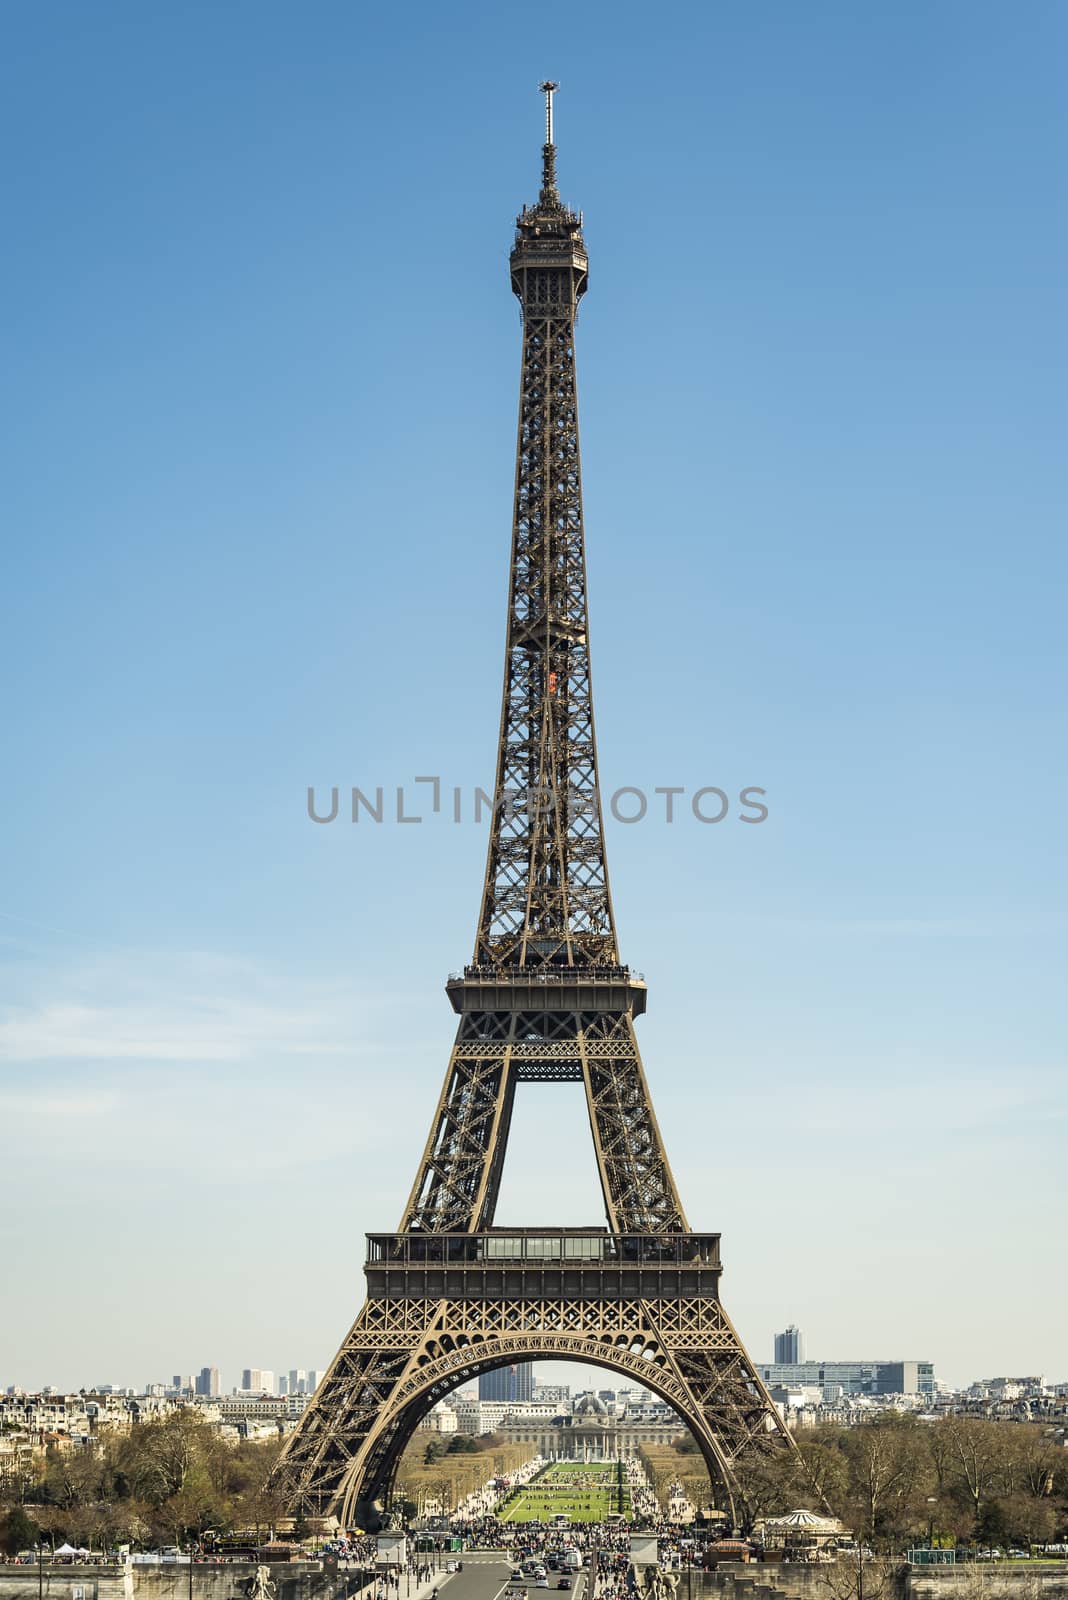 the famous Eiffel Tower in Paris, France